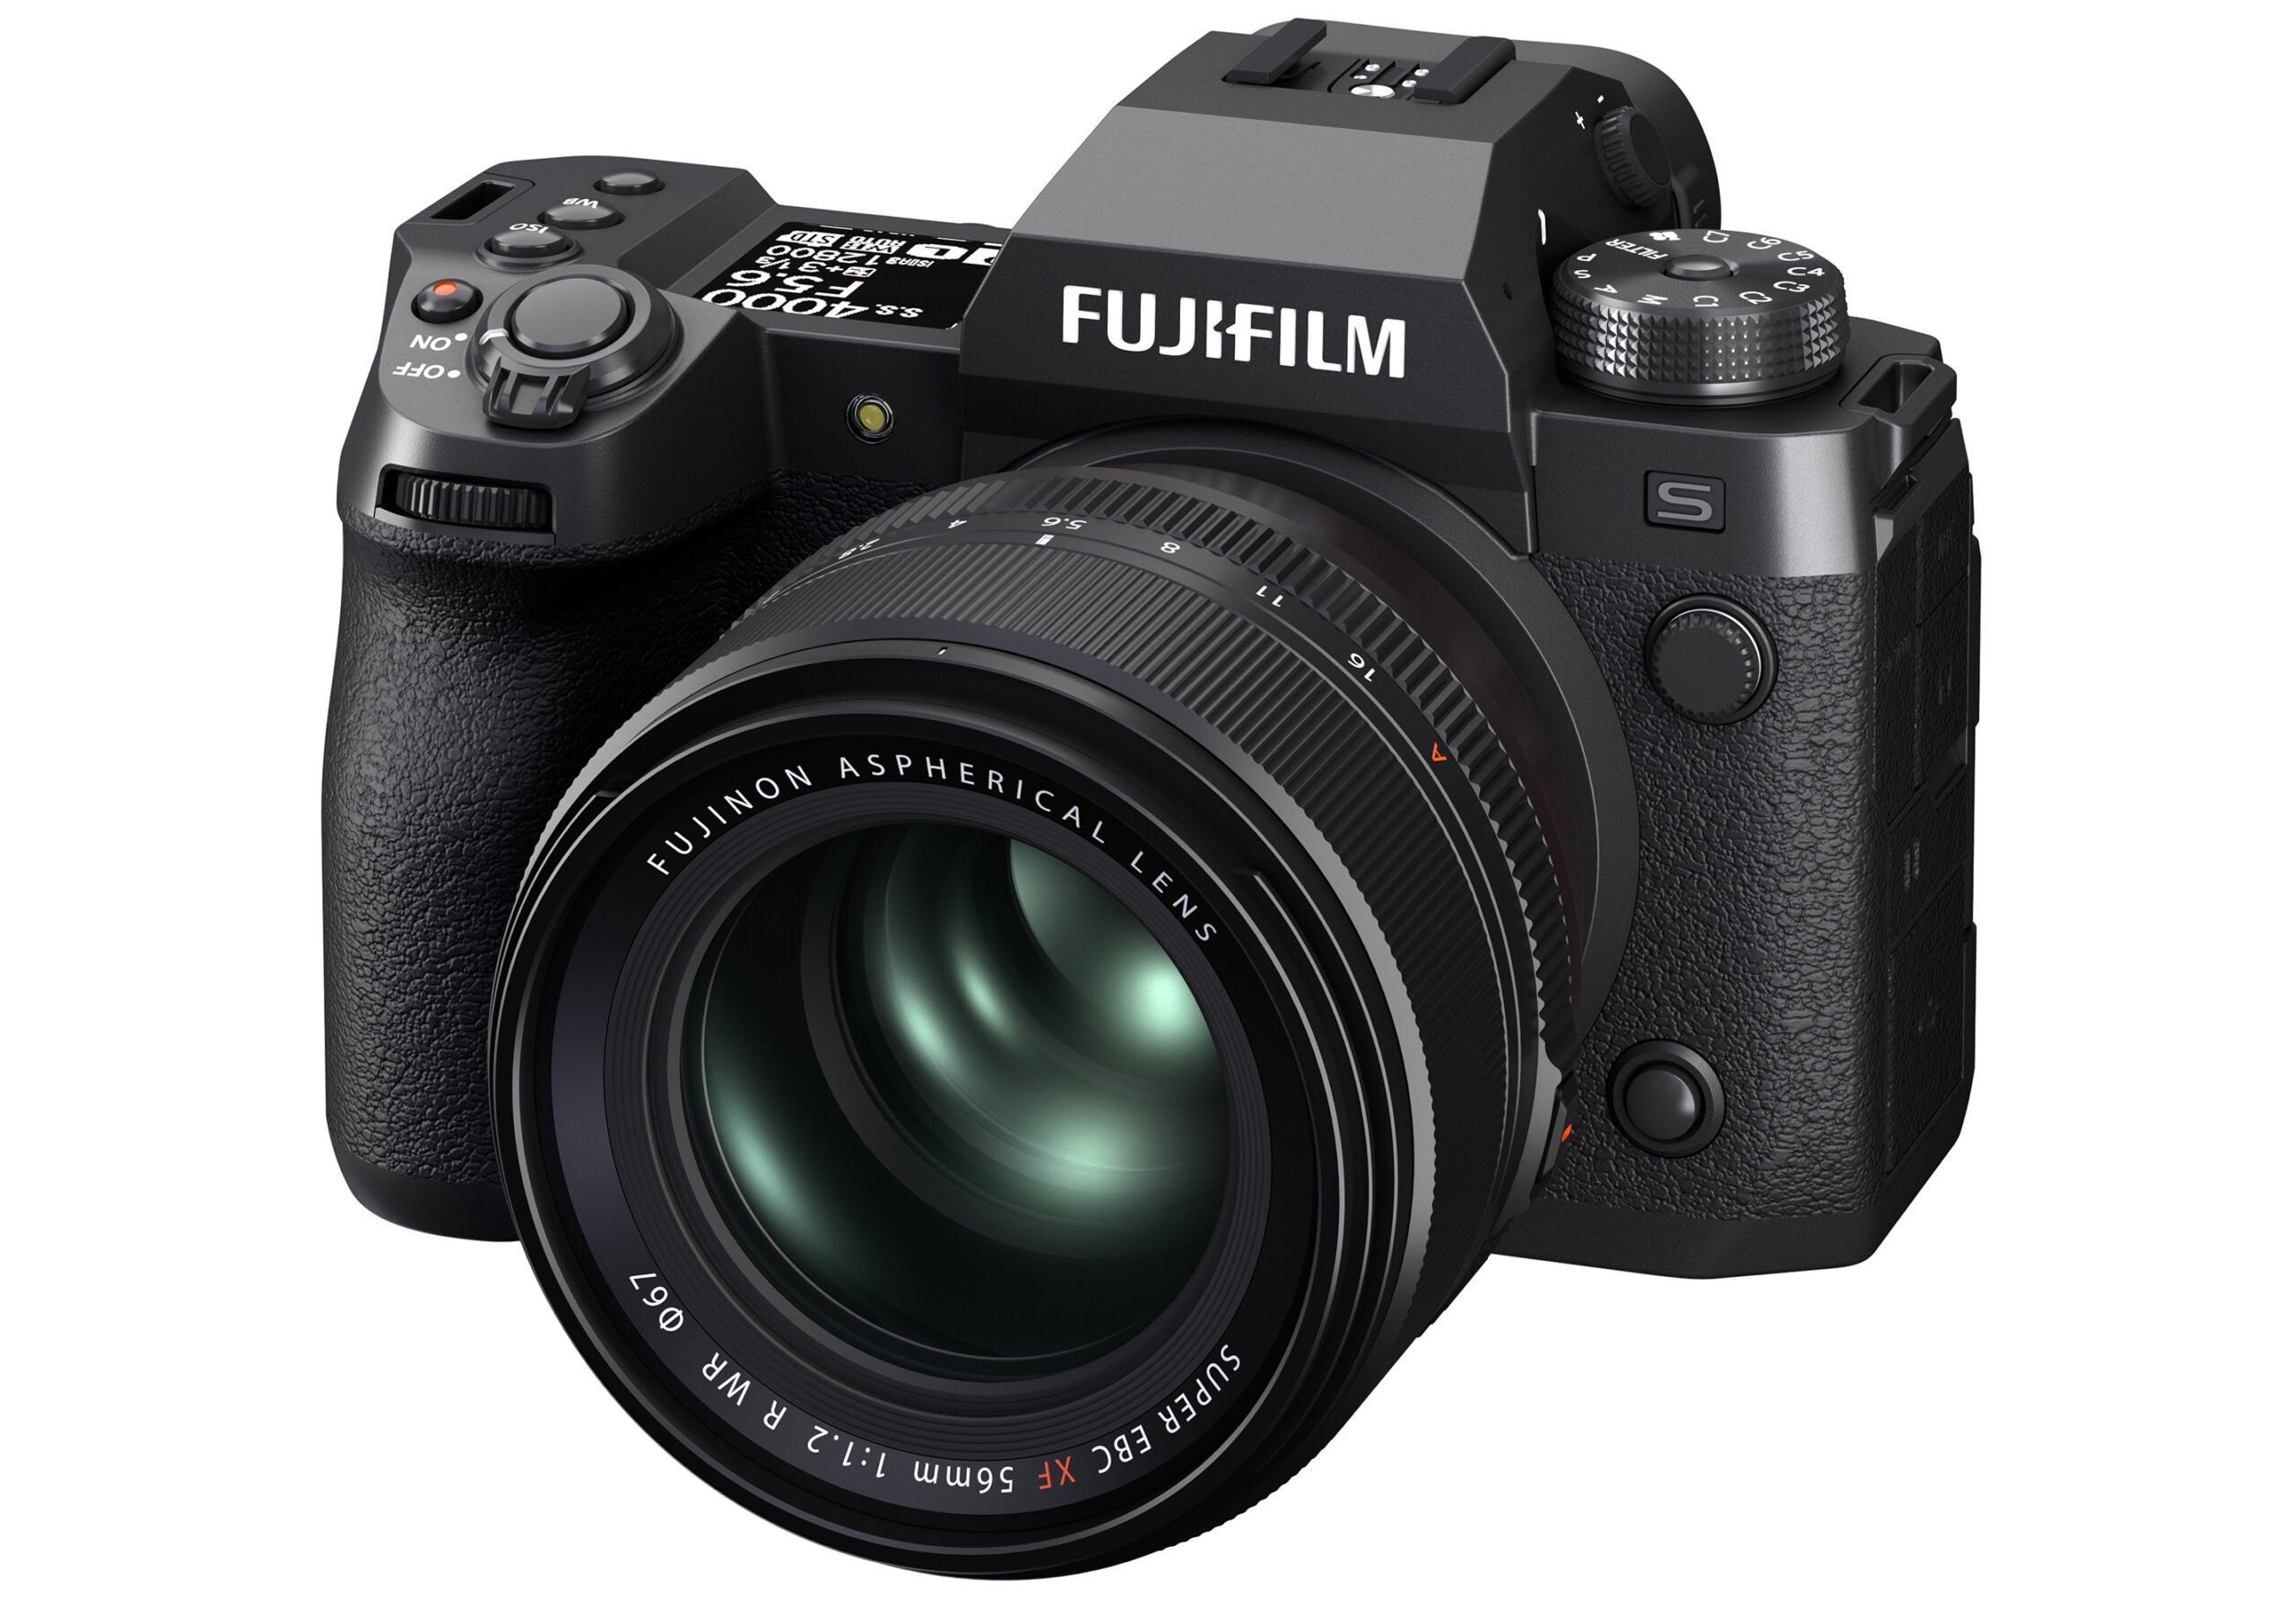 The new Fujifilm 56mm f/1.2 R WR lens